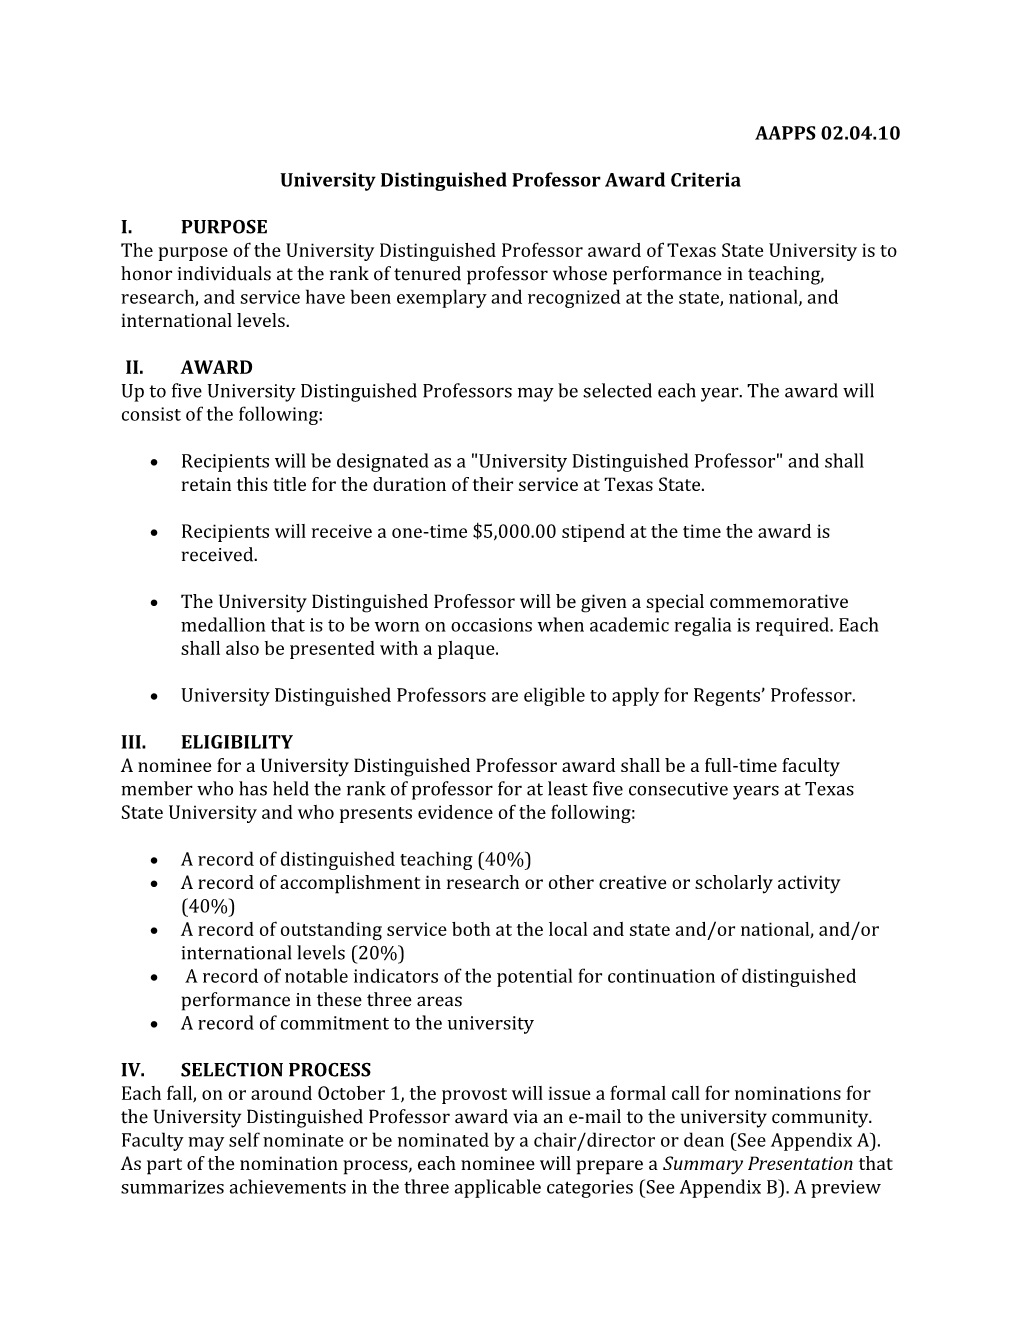 University Distinguished Professor Award Criteria